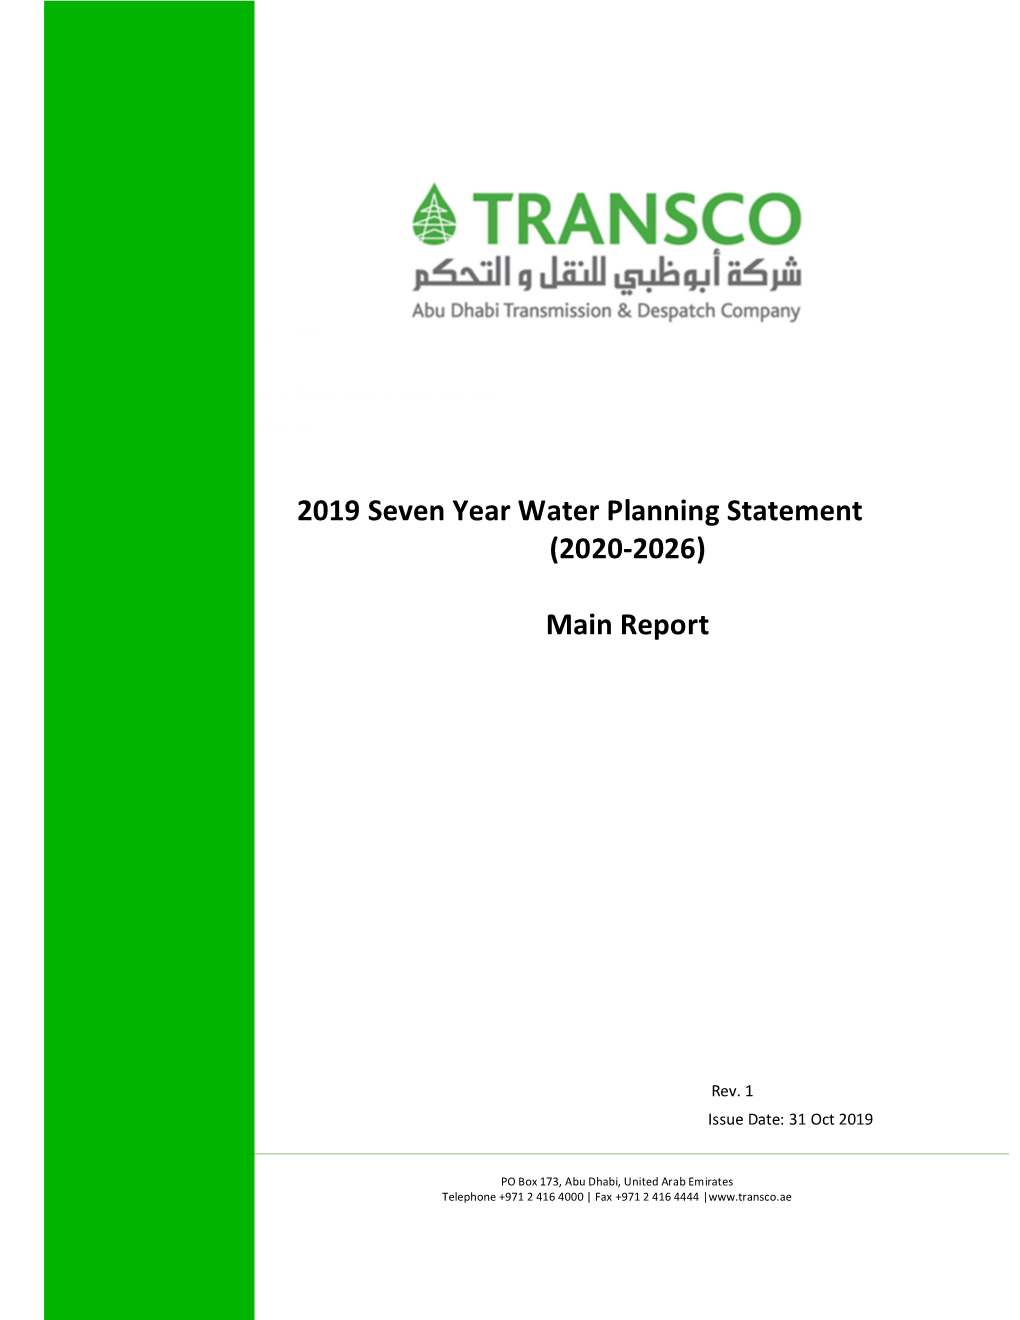 2019 Seven Year Water Planning Statement (2020-2026) June 2017 Main Report